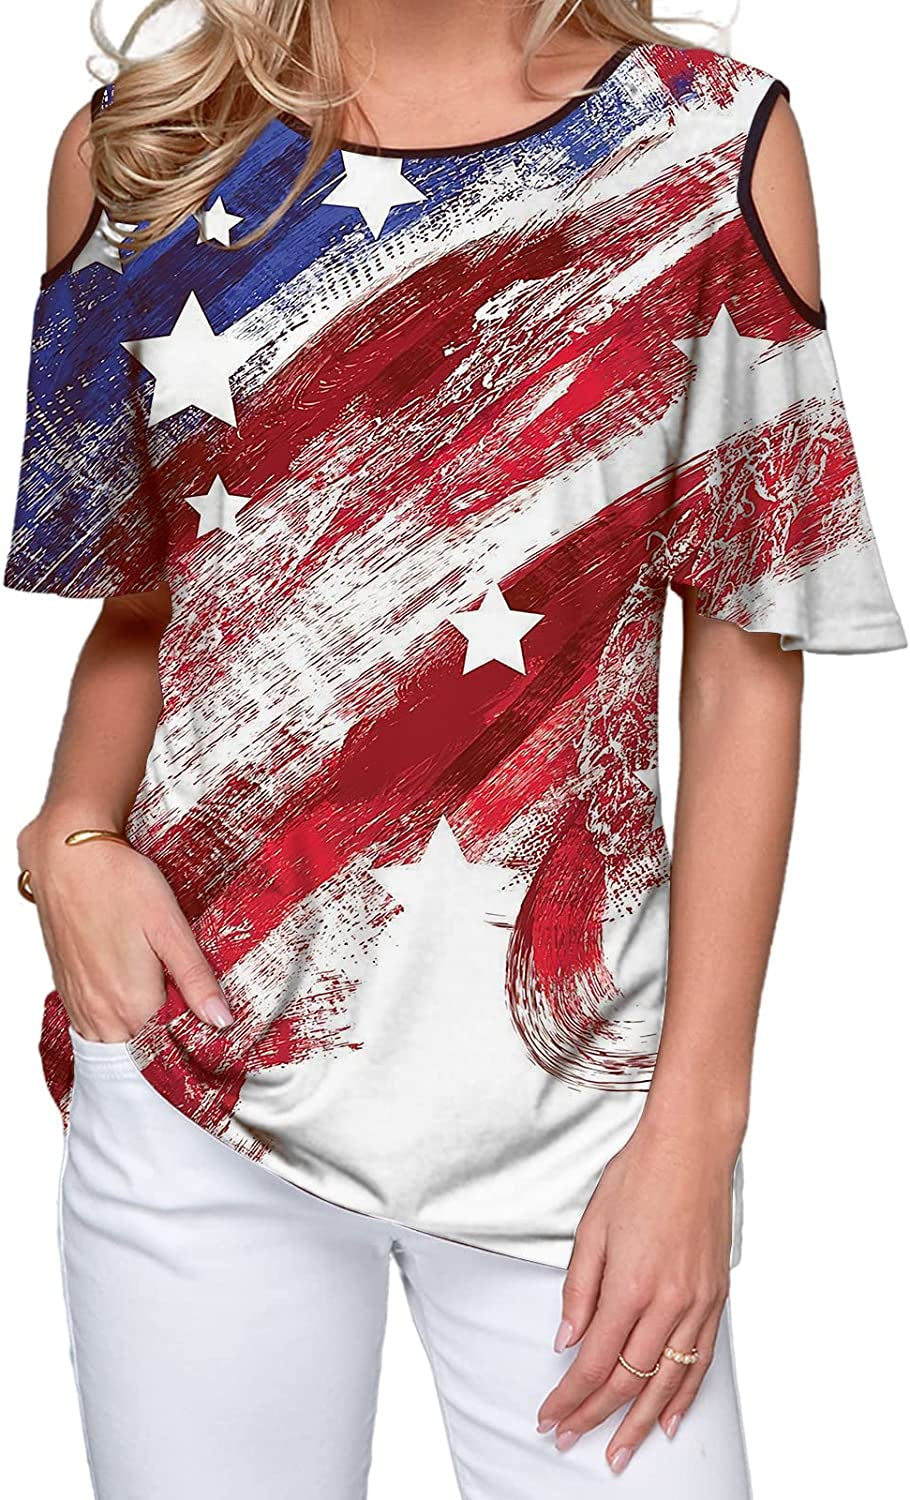  Cold Shoulder American Flag Shirt Stars Stripe Patriotic T-Shirt Summer Casual Tee Top